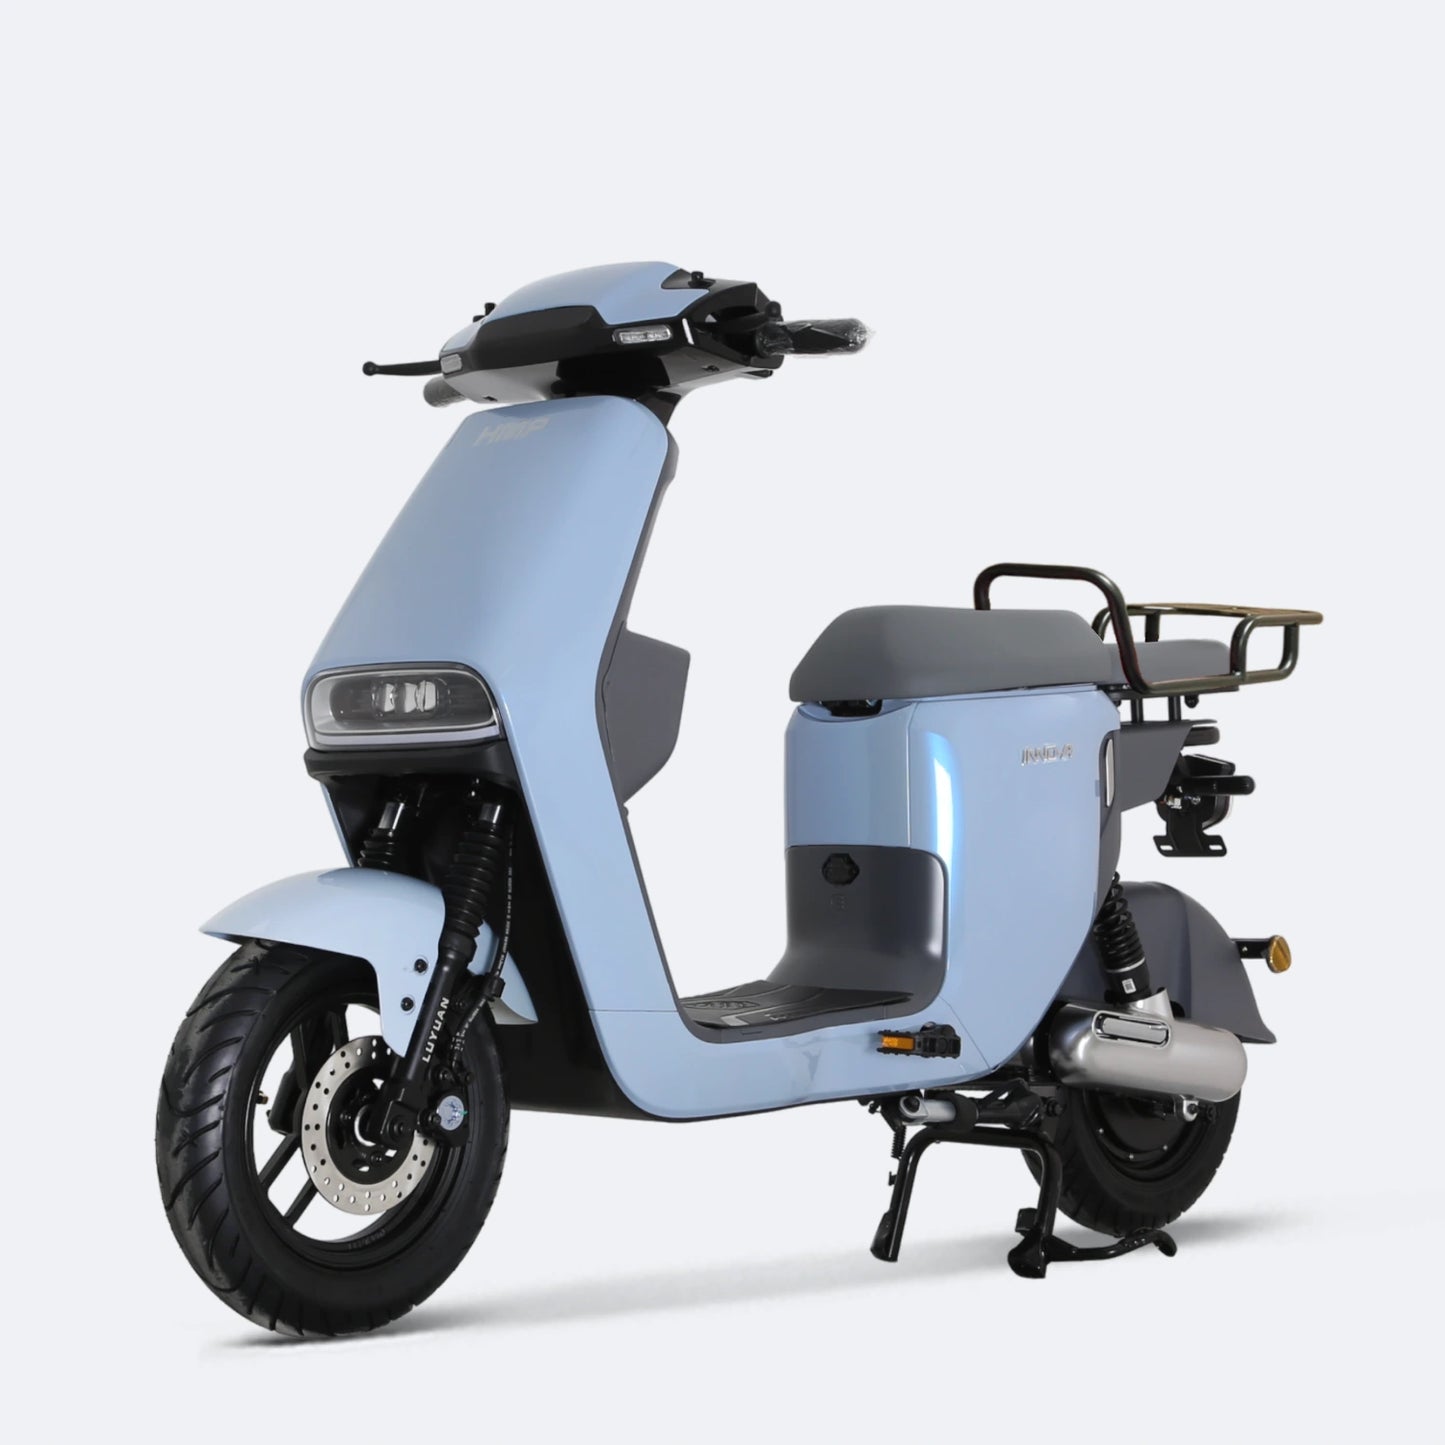 INNO-A Cargo Lead-acid Moped style Class 2 E-bike